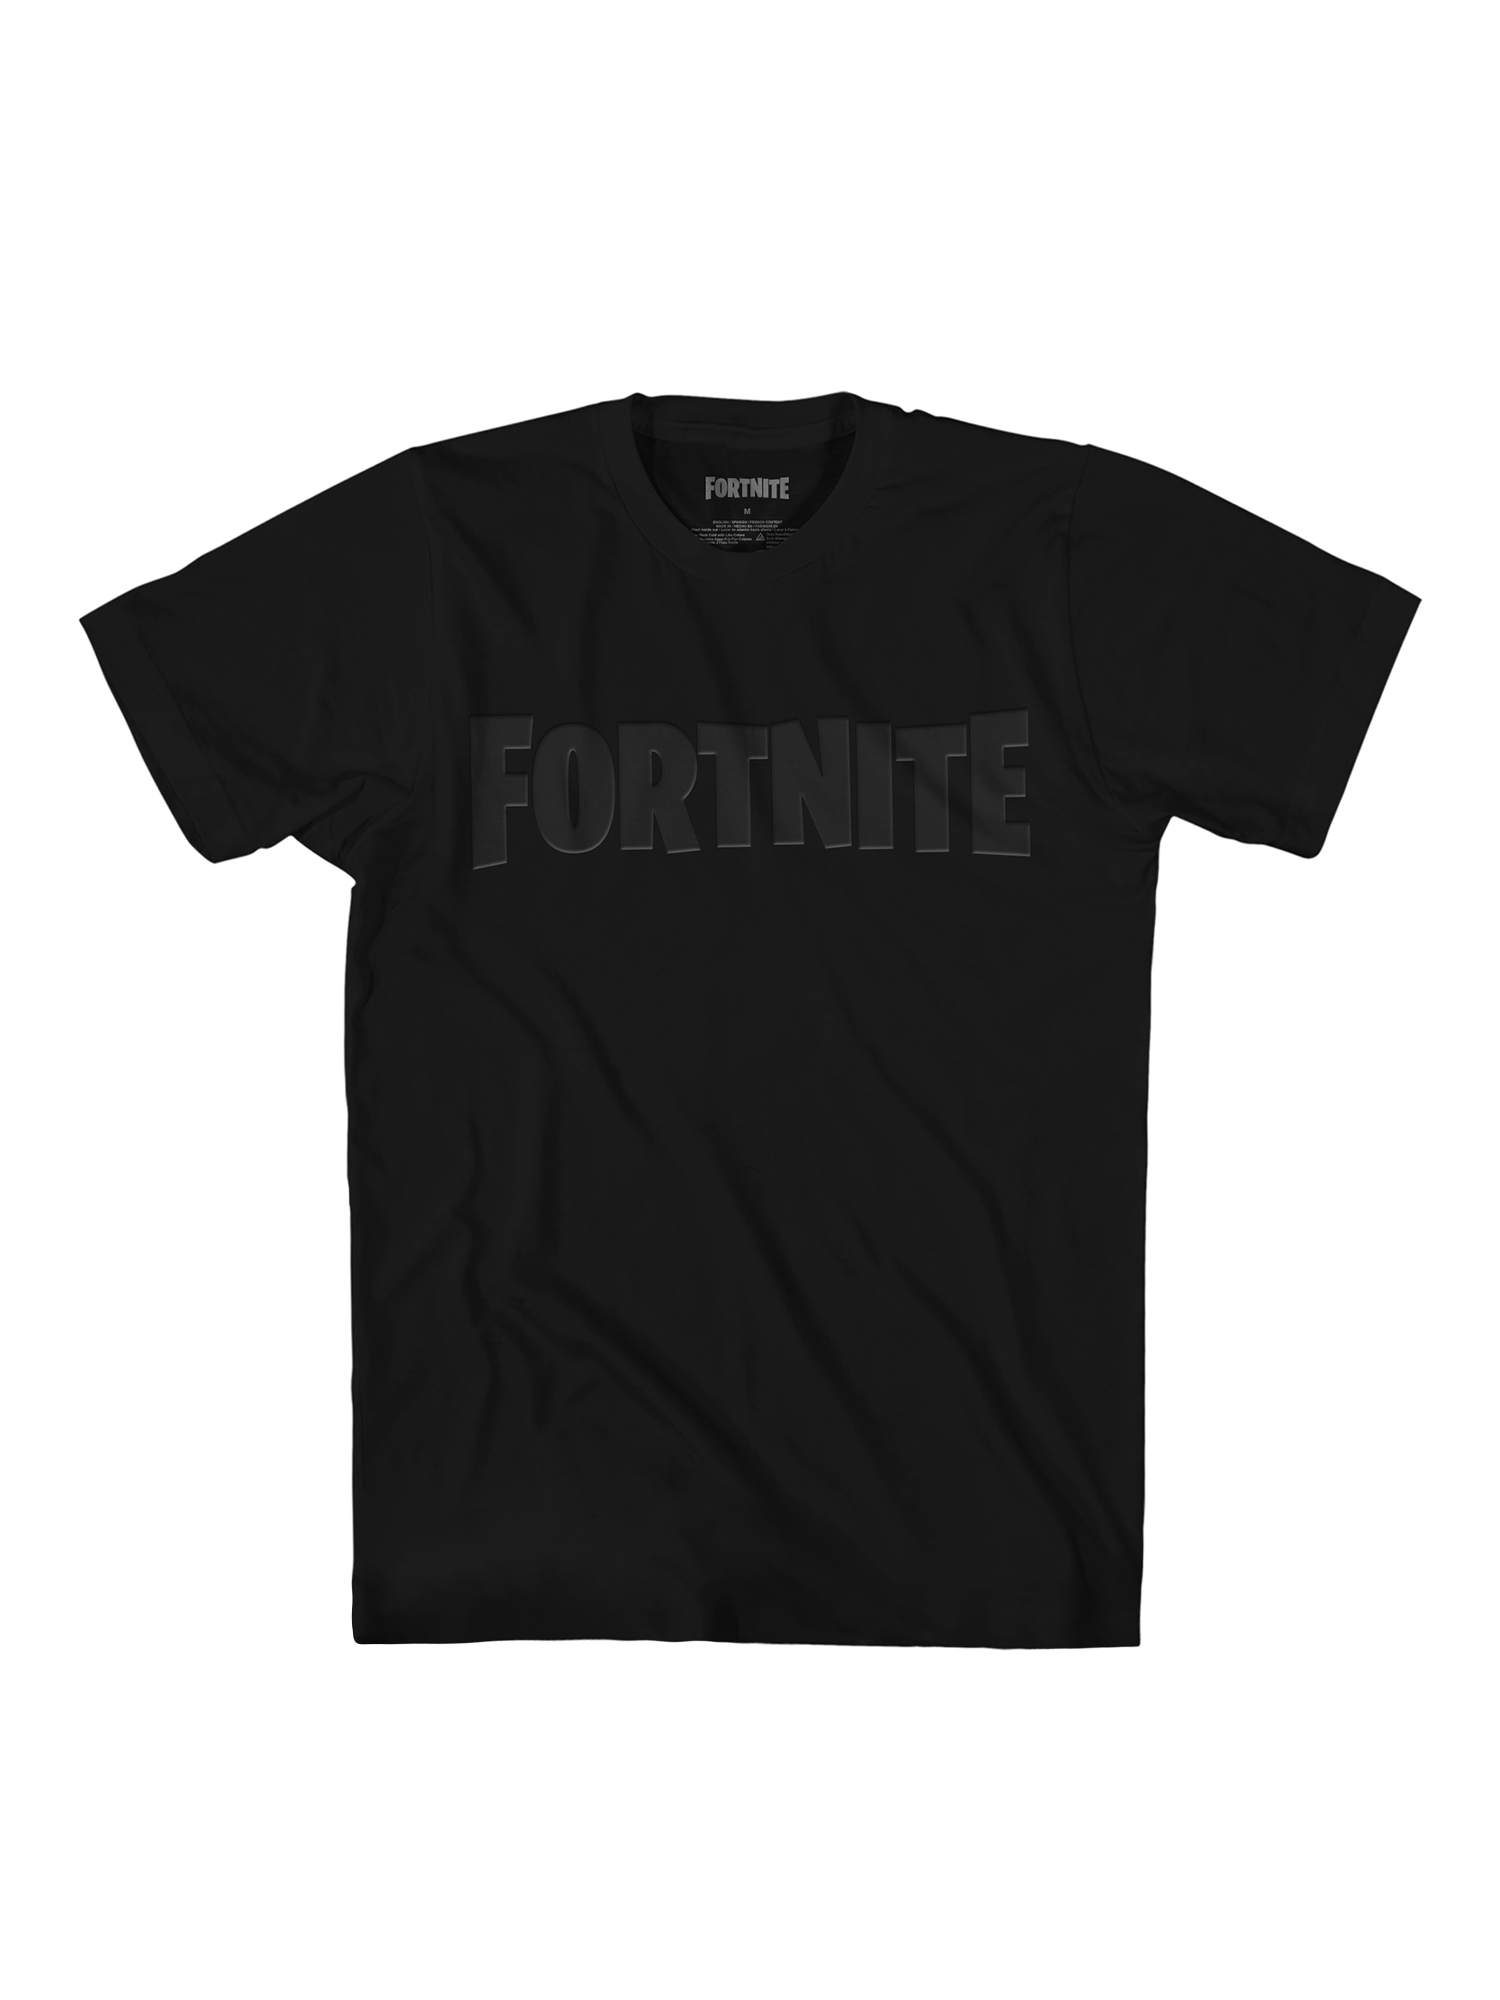 Fortnite Boys Logo Graphic T-Shirt, Sizes 8-18 - image 1 of 5